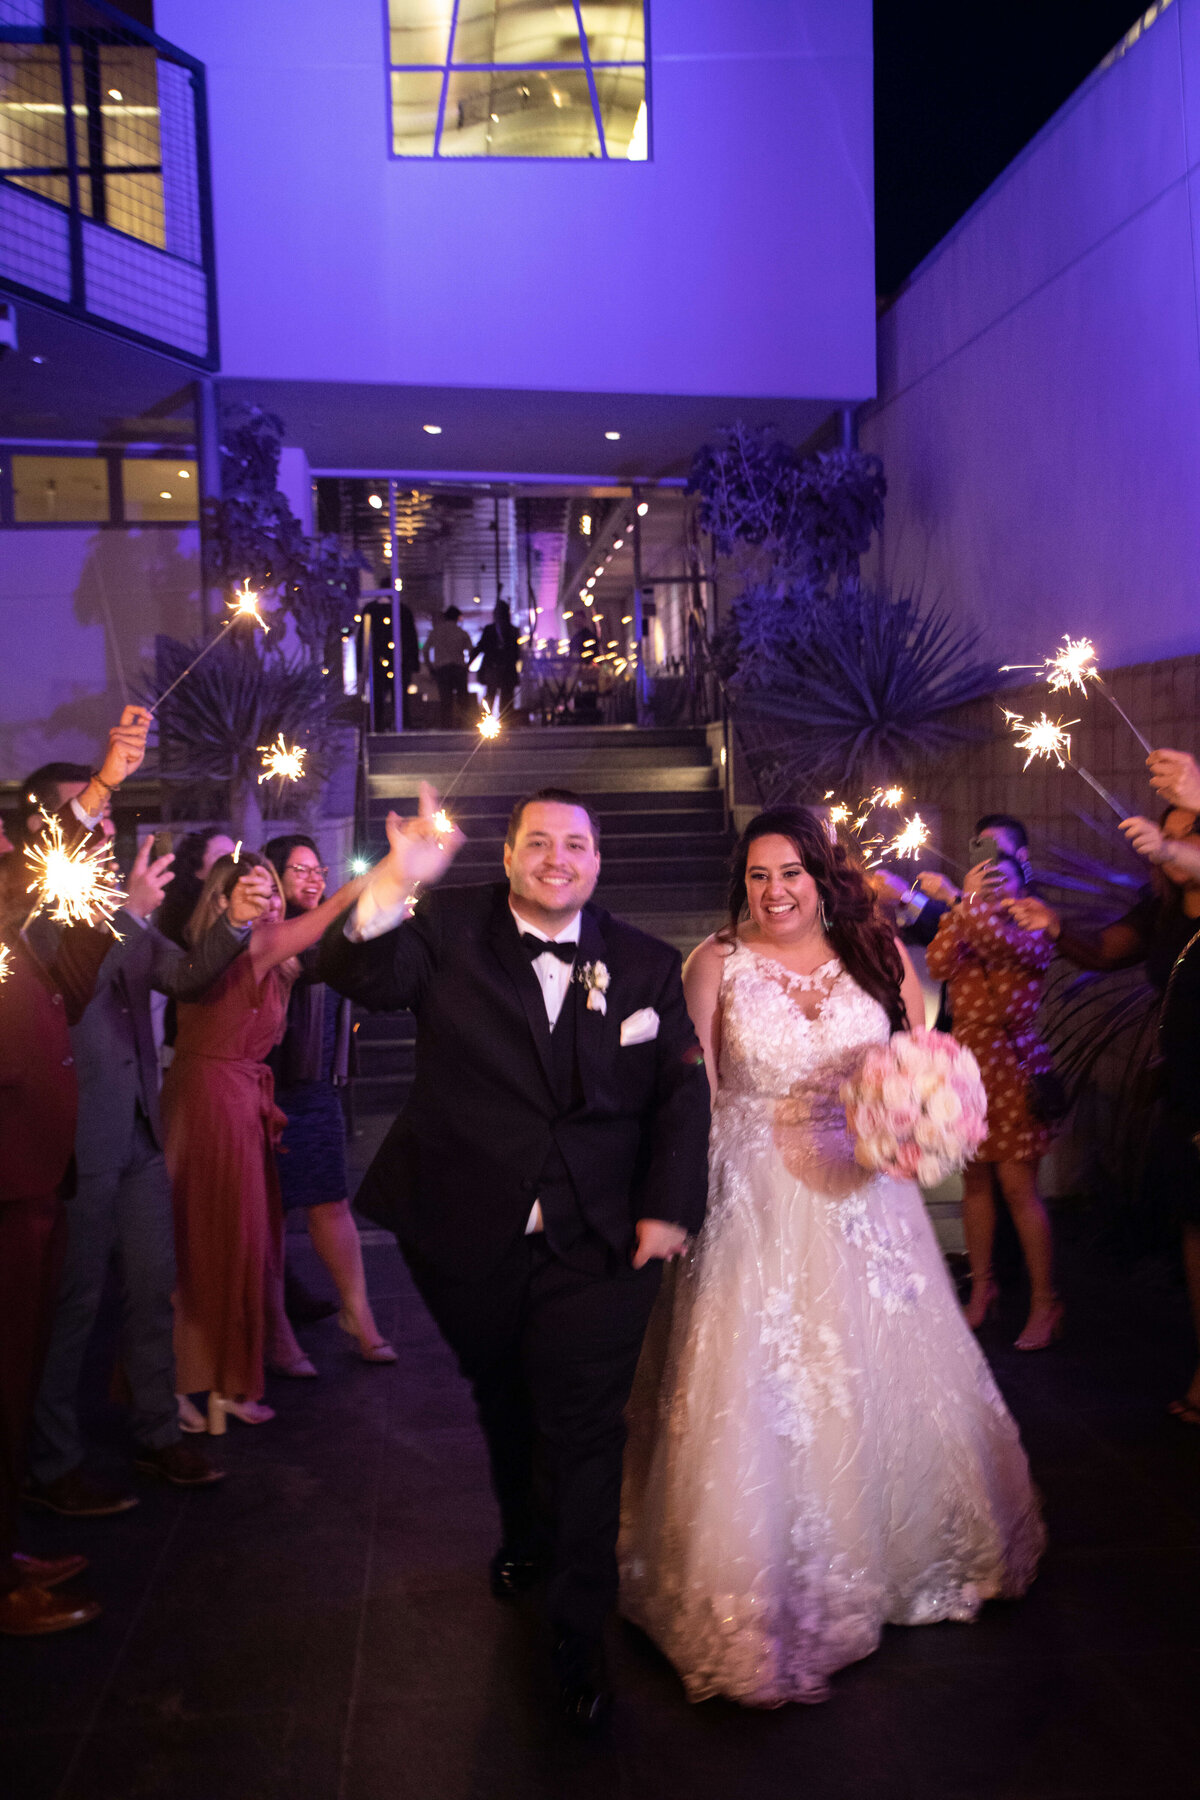 KS-Gray-Photography-newport-beach-wedding-photographer-fire-sparklers-exit